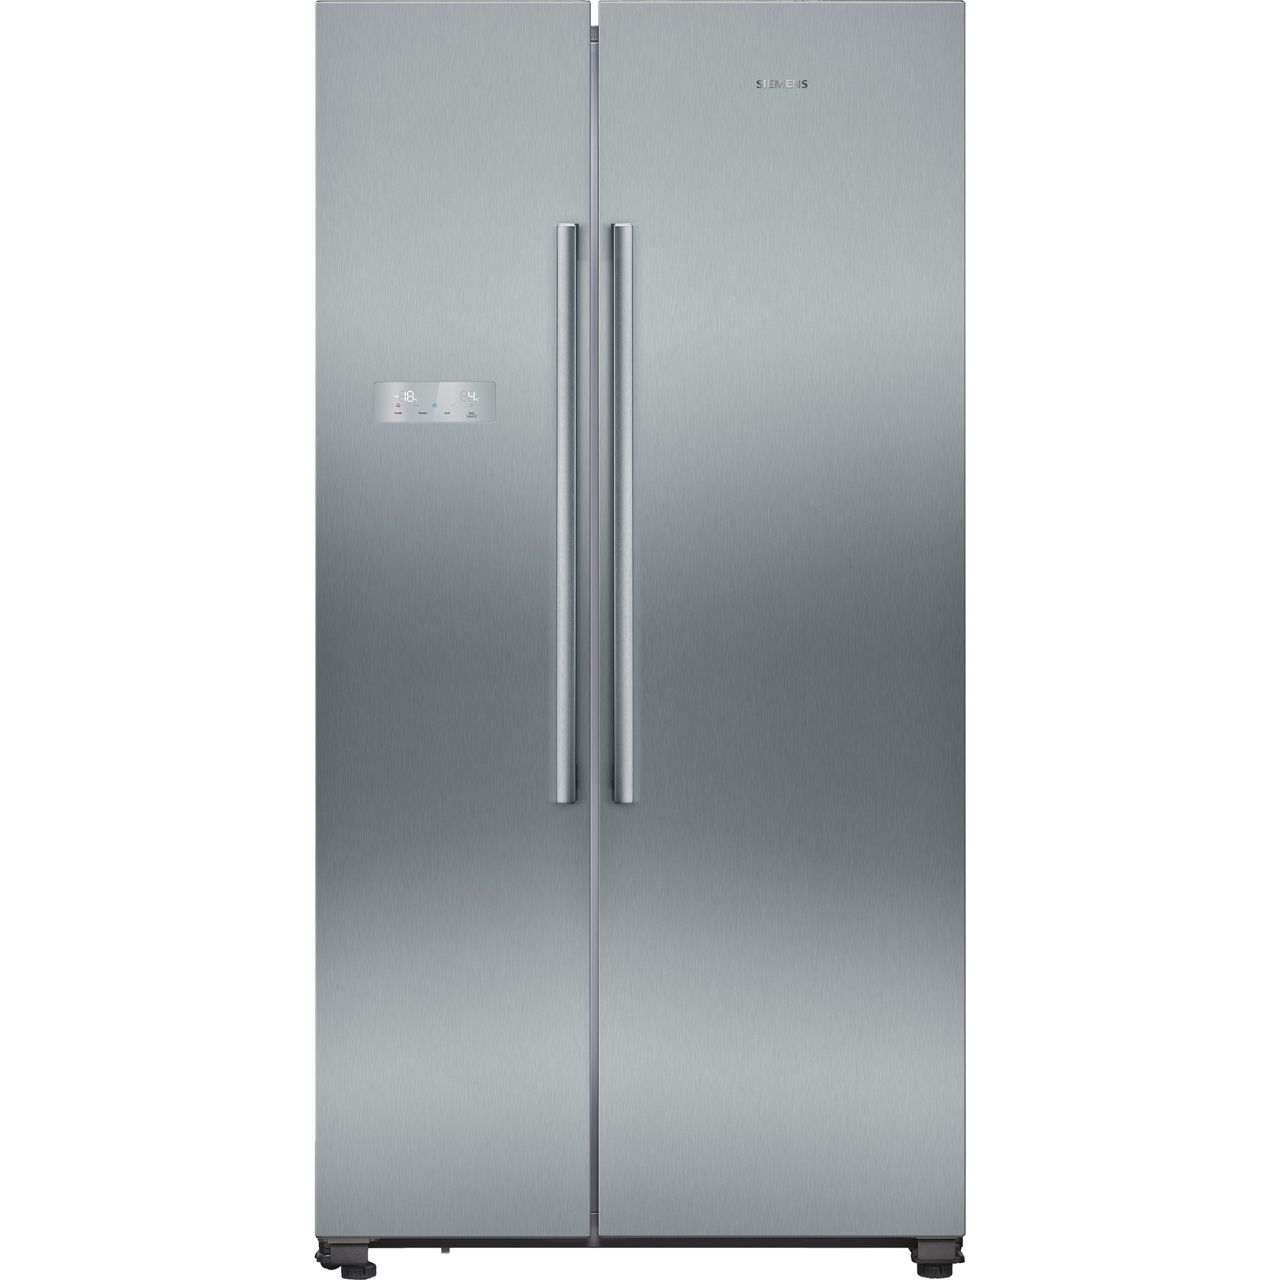 Siemens IQ-300 KA93NVIFP American Fridge Freezer Review